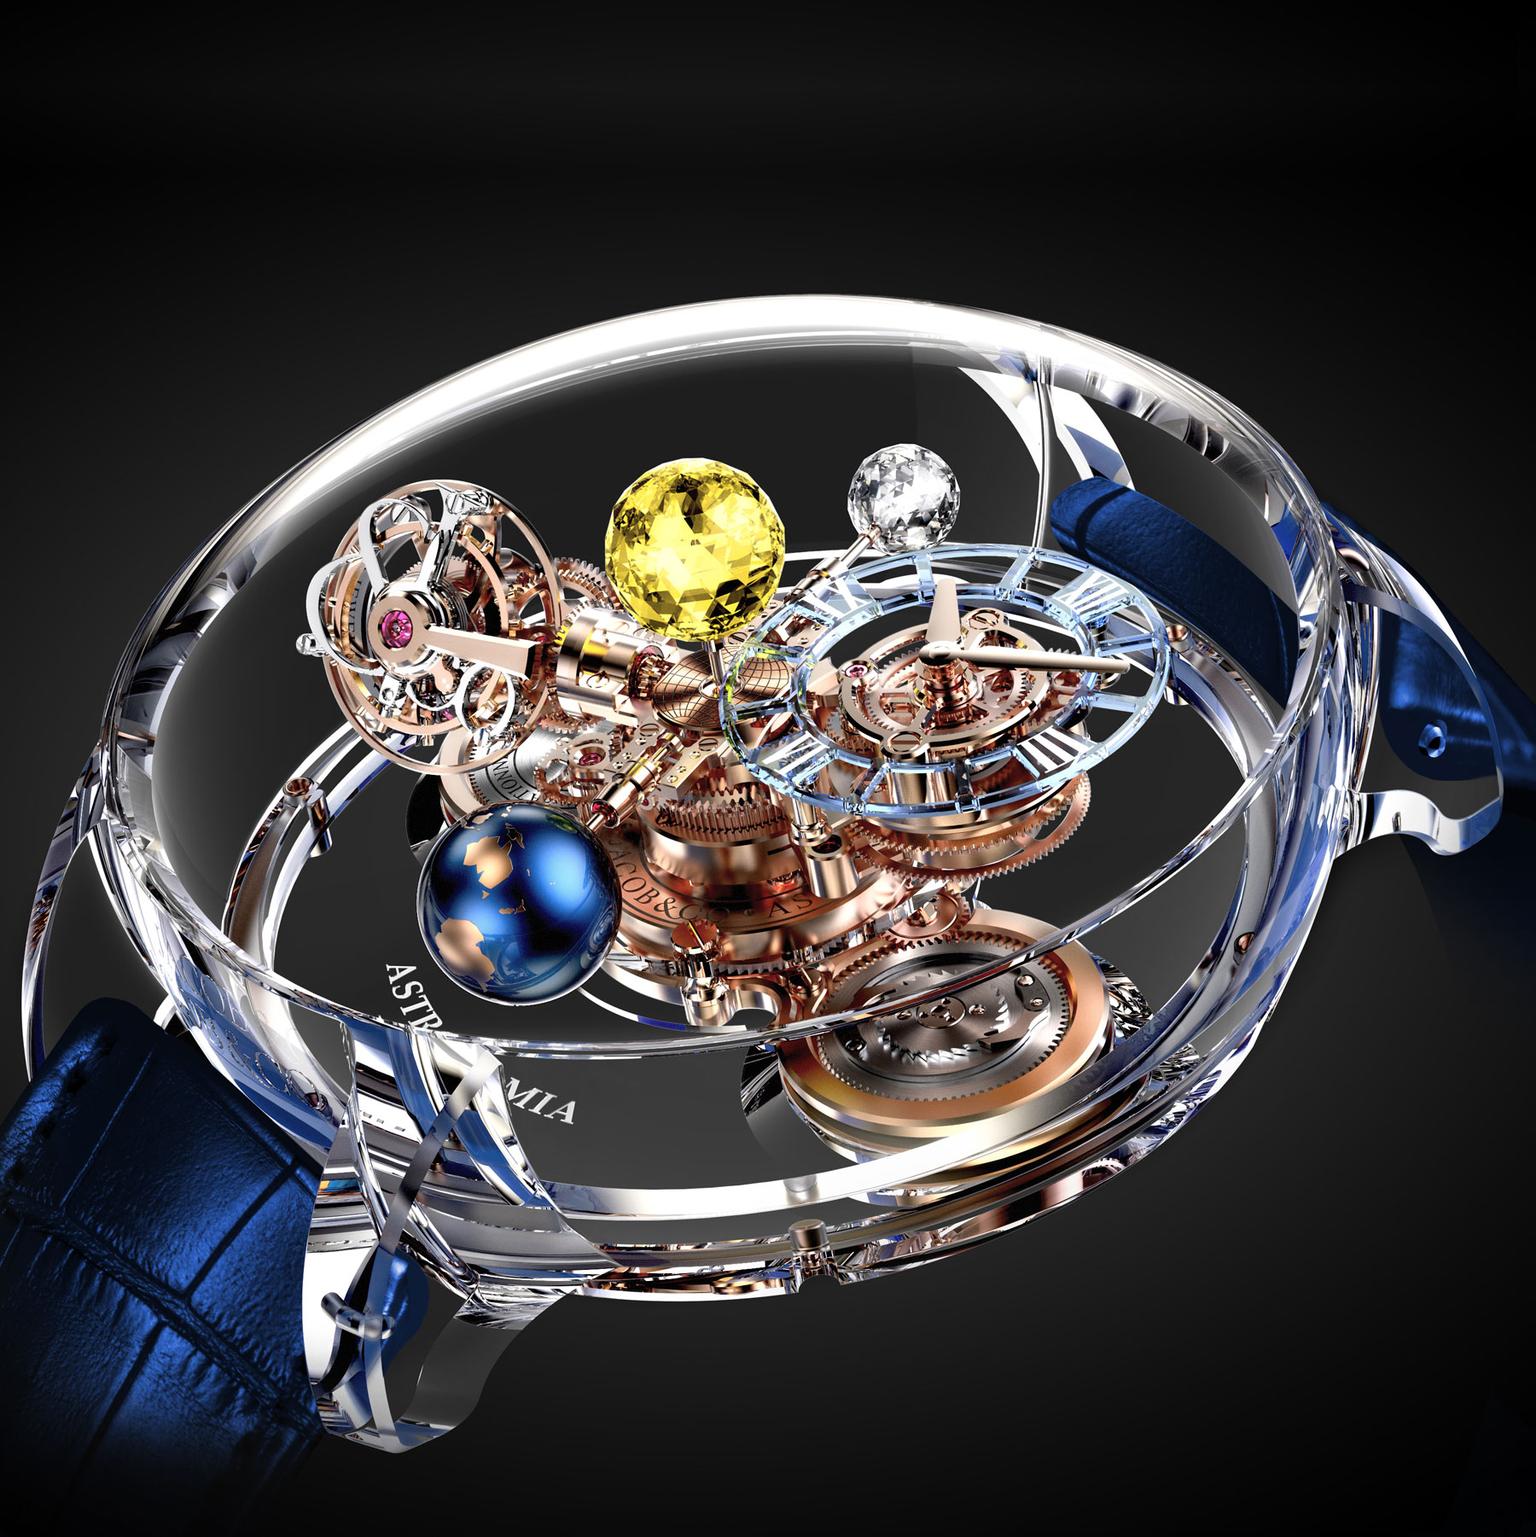 Jacob & Co Astronomia Flawless watch